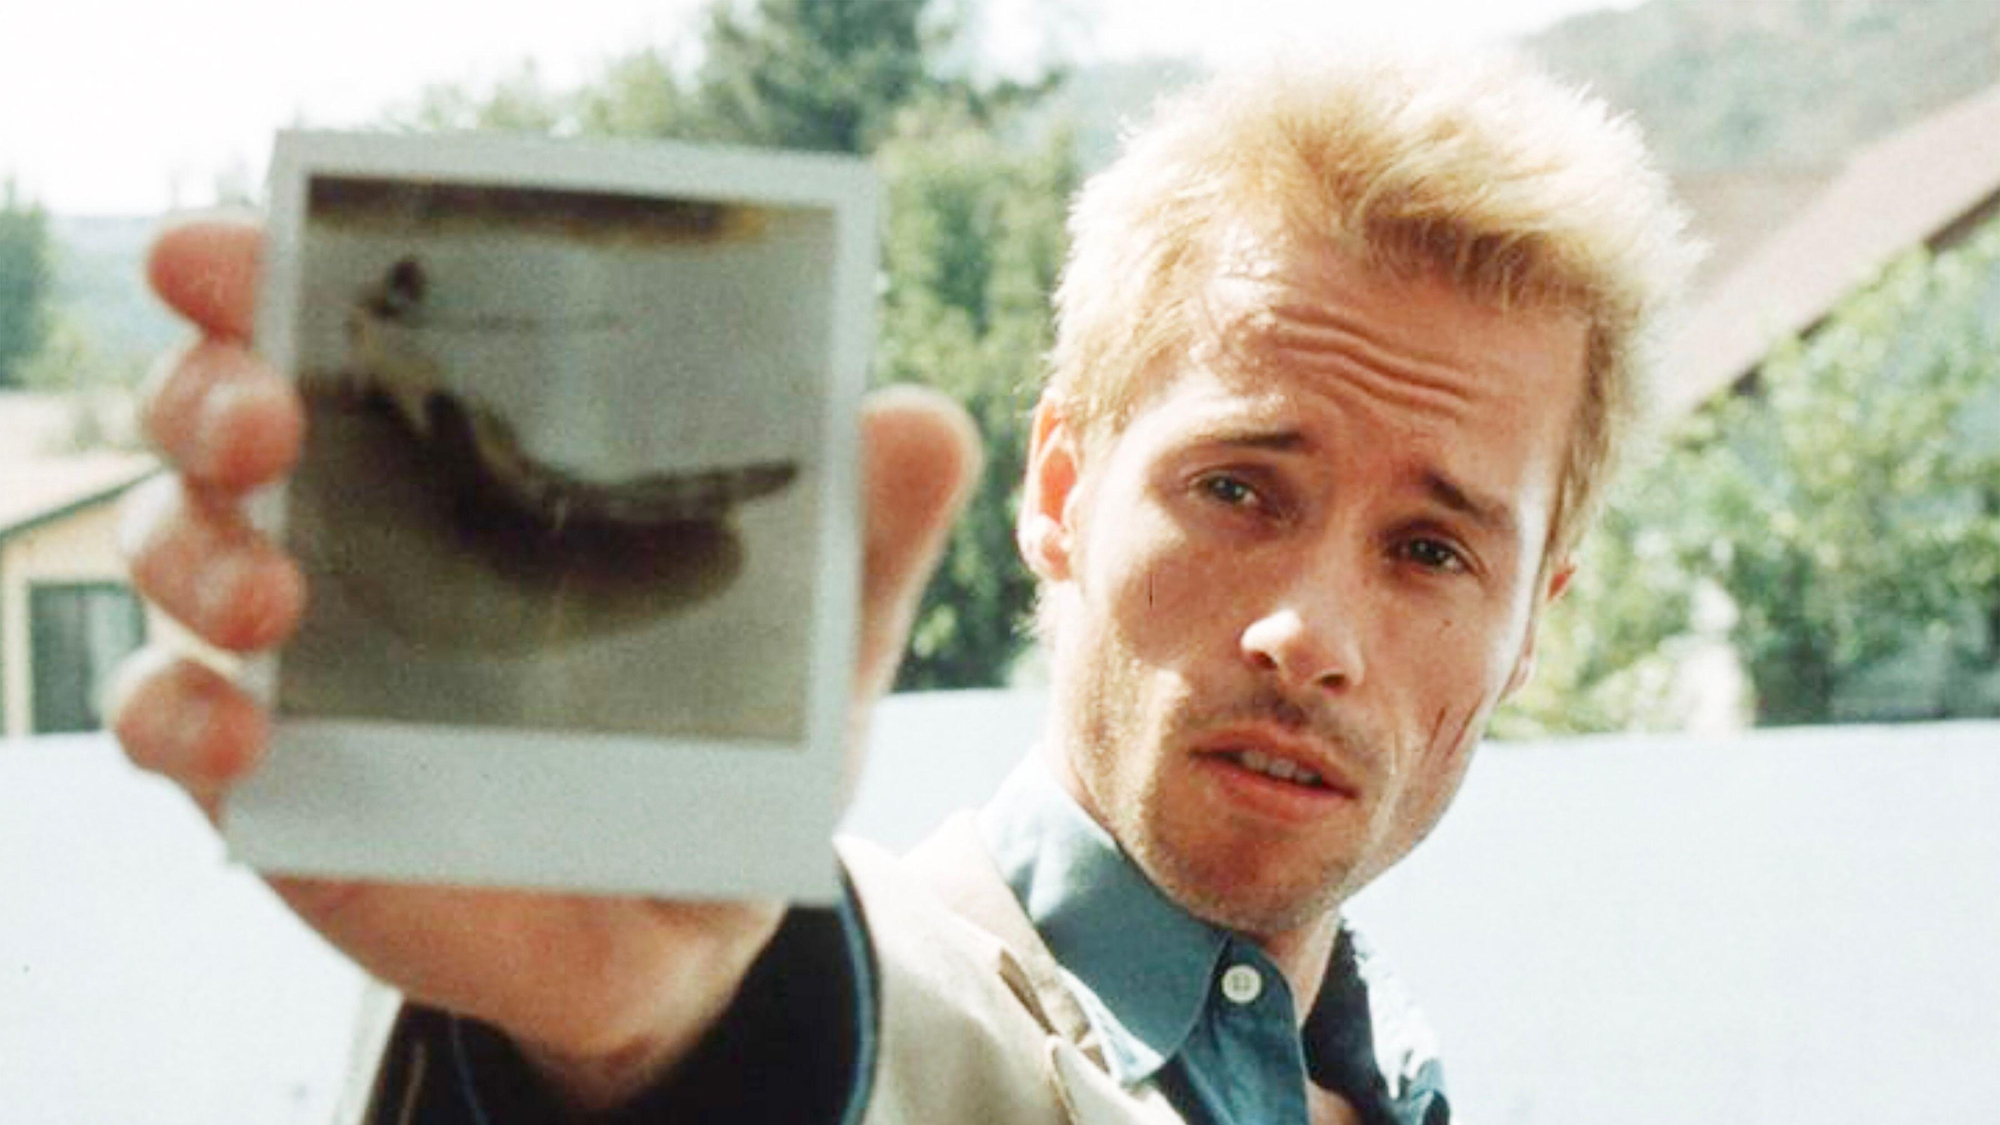 Guy Pearce as Leonard holding a polaroid photo in Memento